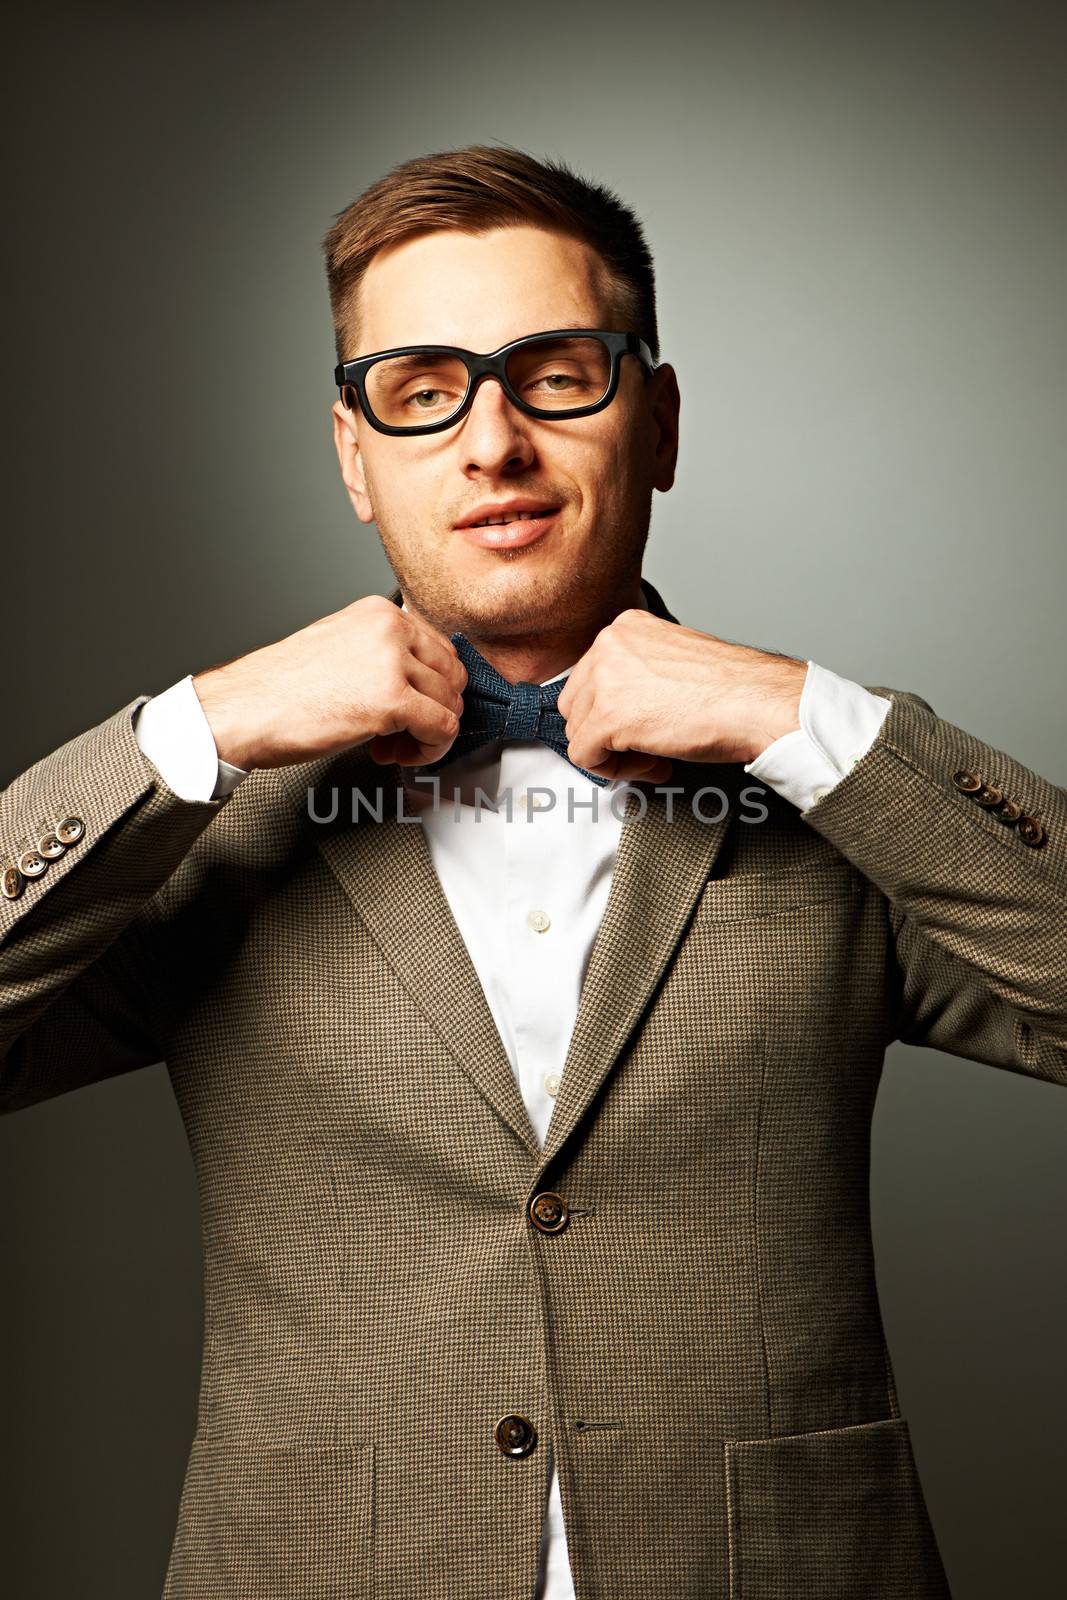 Confident nerd in eyeglasses adjusting his bow-tie against grey background